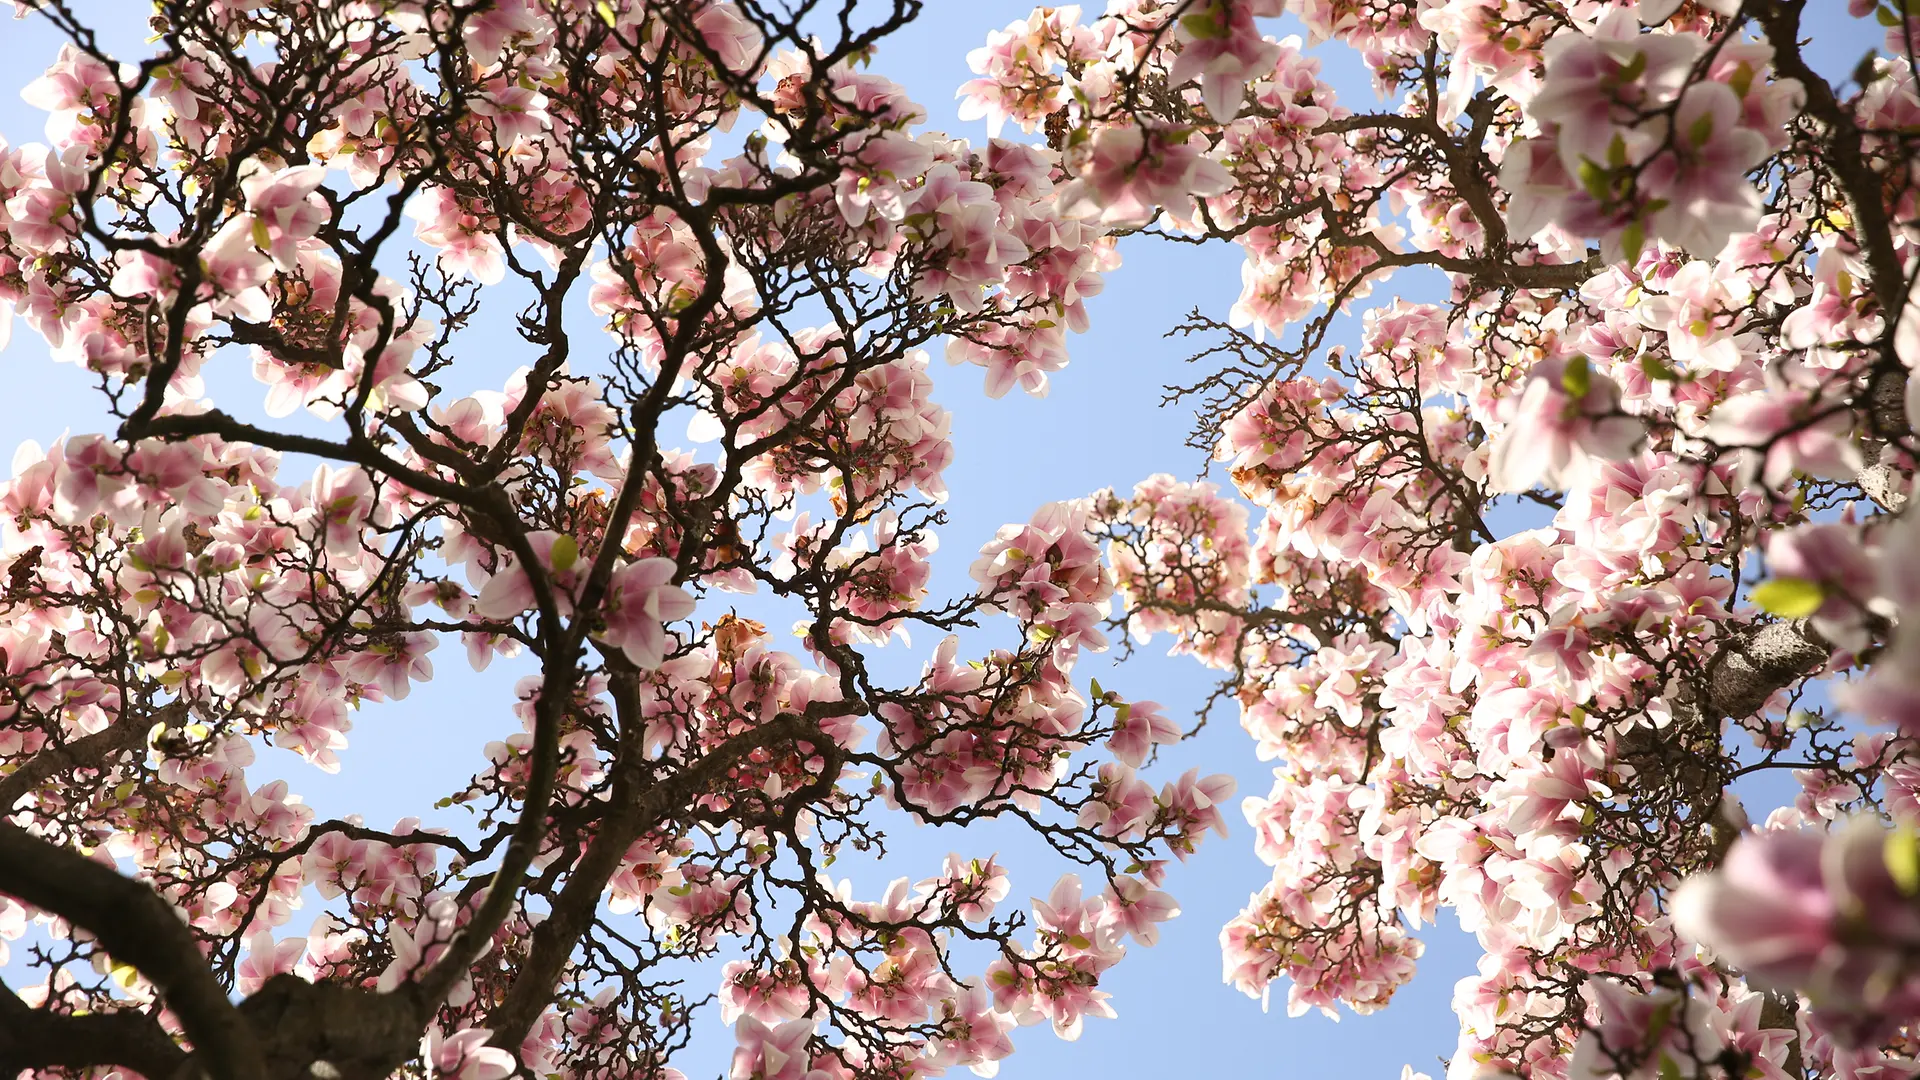 Cherry Blossom Trees Virtual Tours - How to Take a Free Google